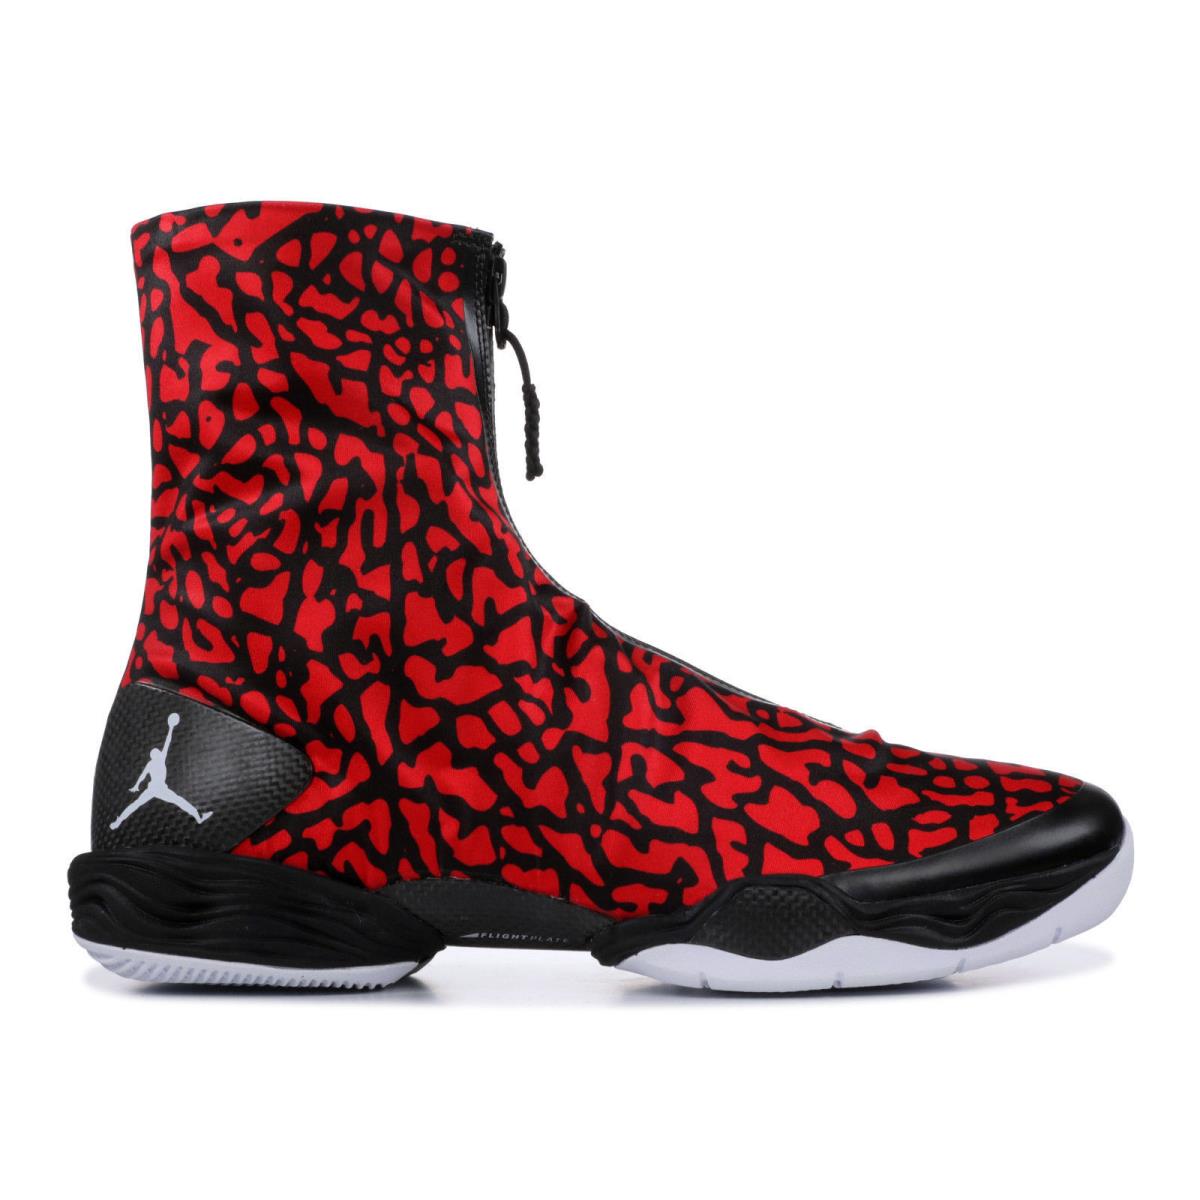 Nike Air Jordan XX8 28 Size 12. Bred Red Black Elephant 555109-610